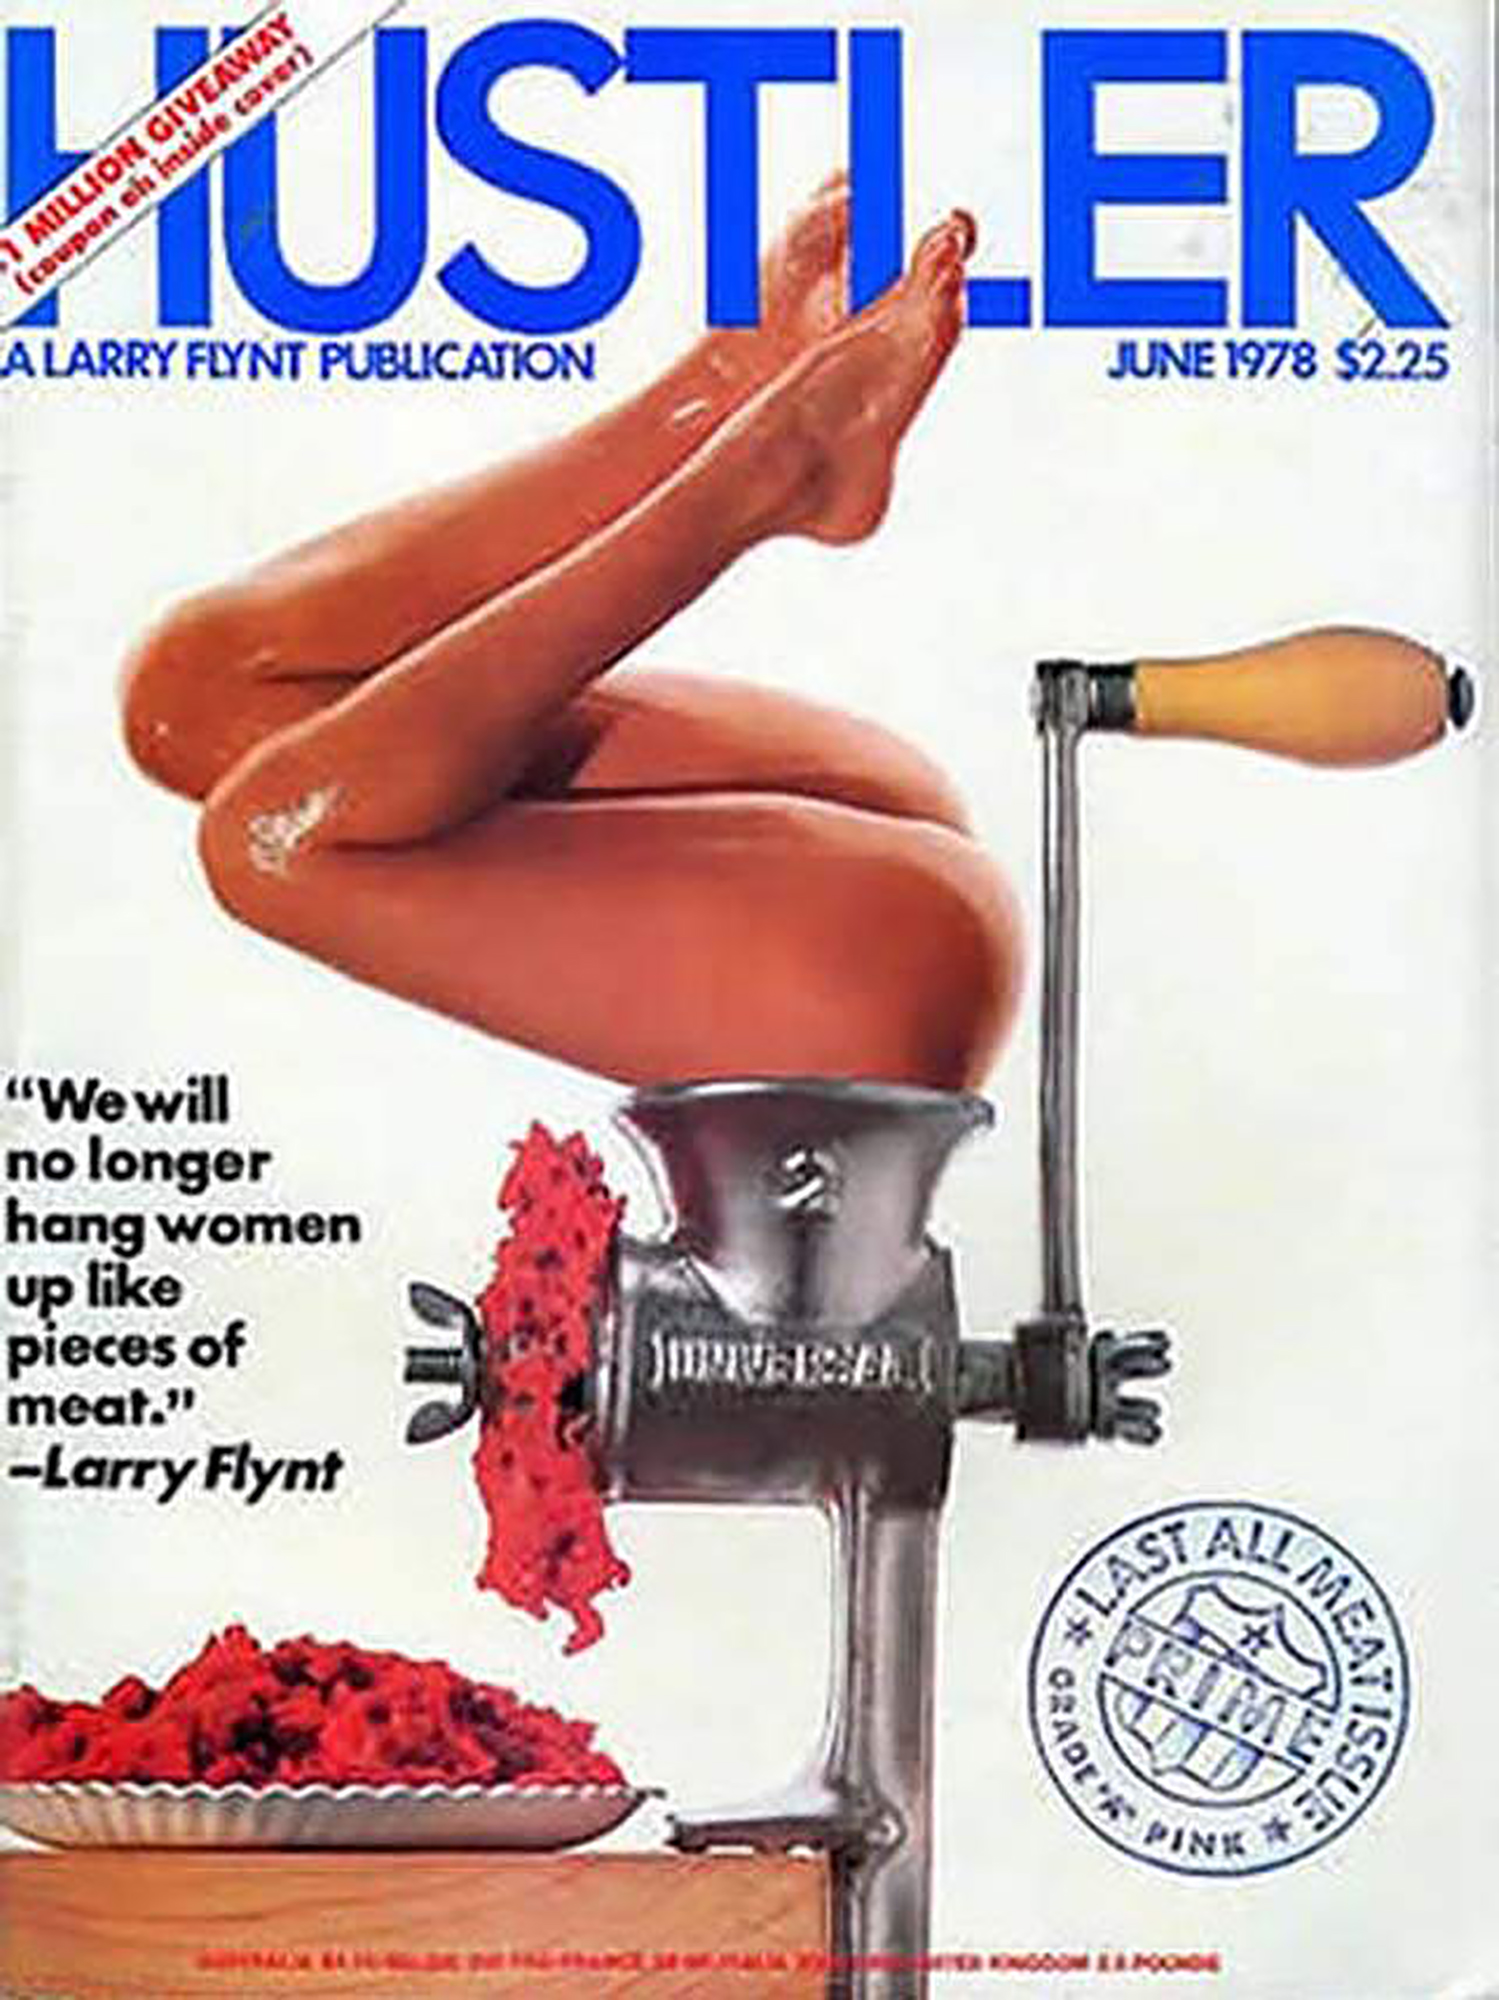 daniel laparra recommends hustler nude magazine pic